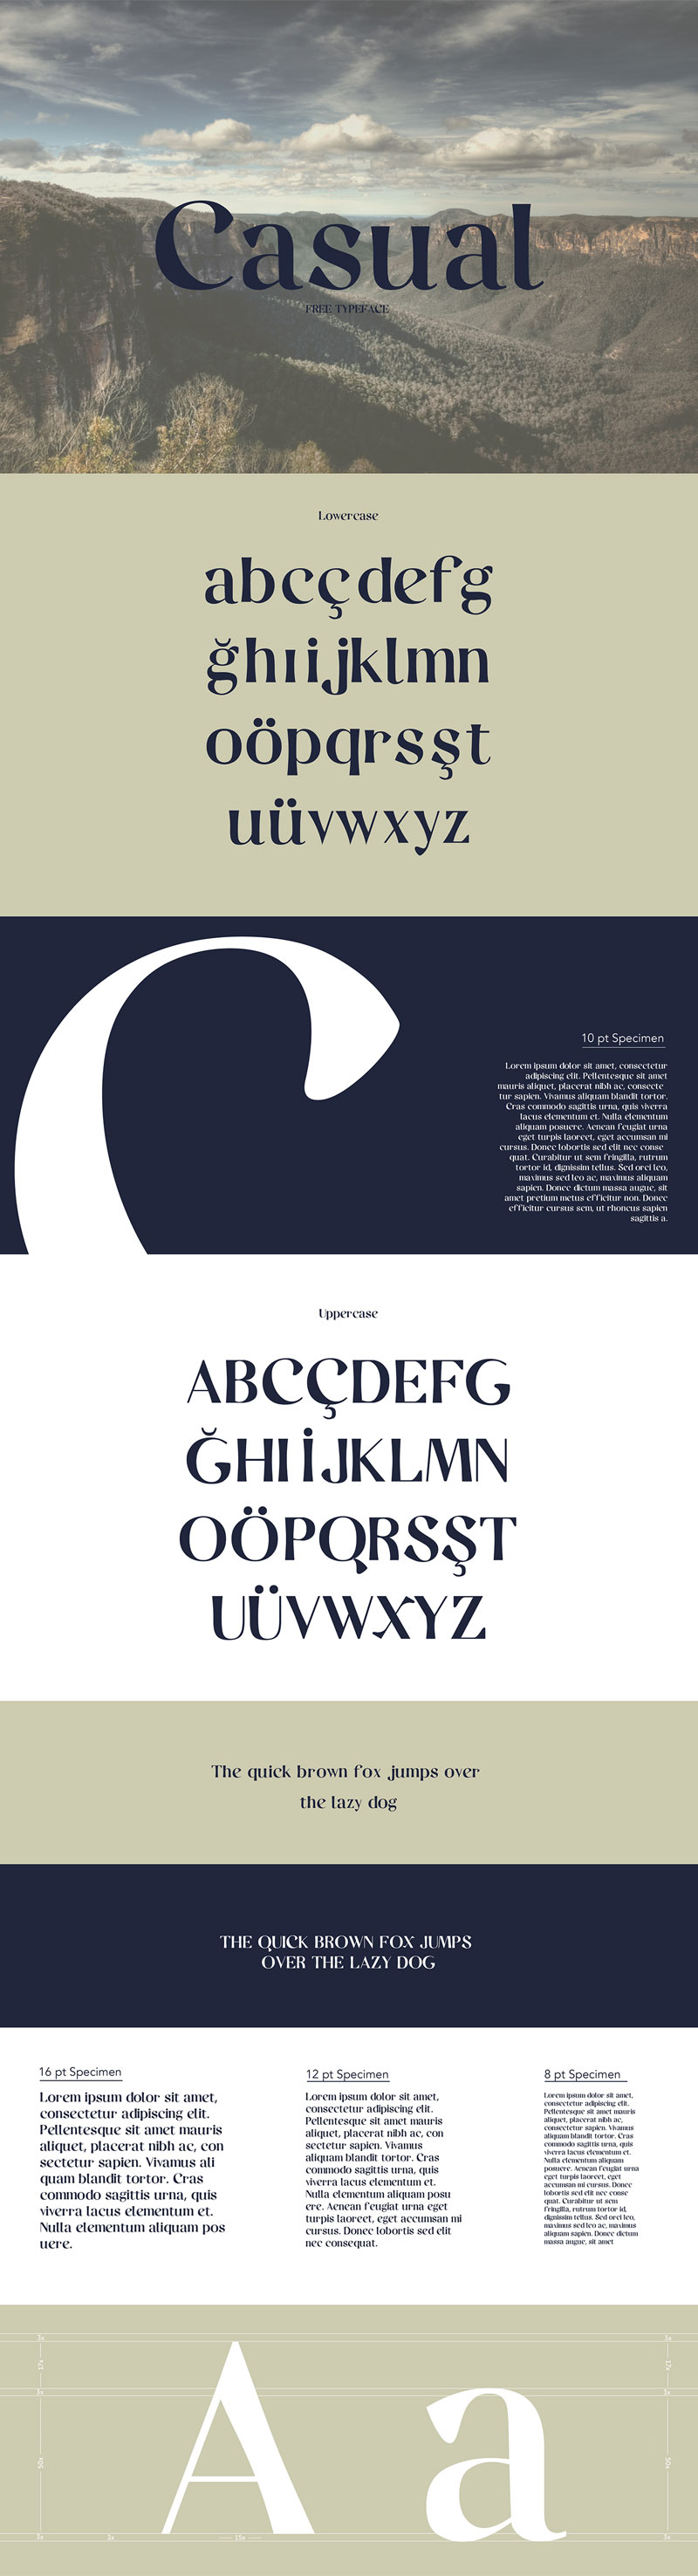 Casual-Free-Serif-Typeface